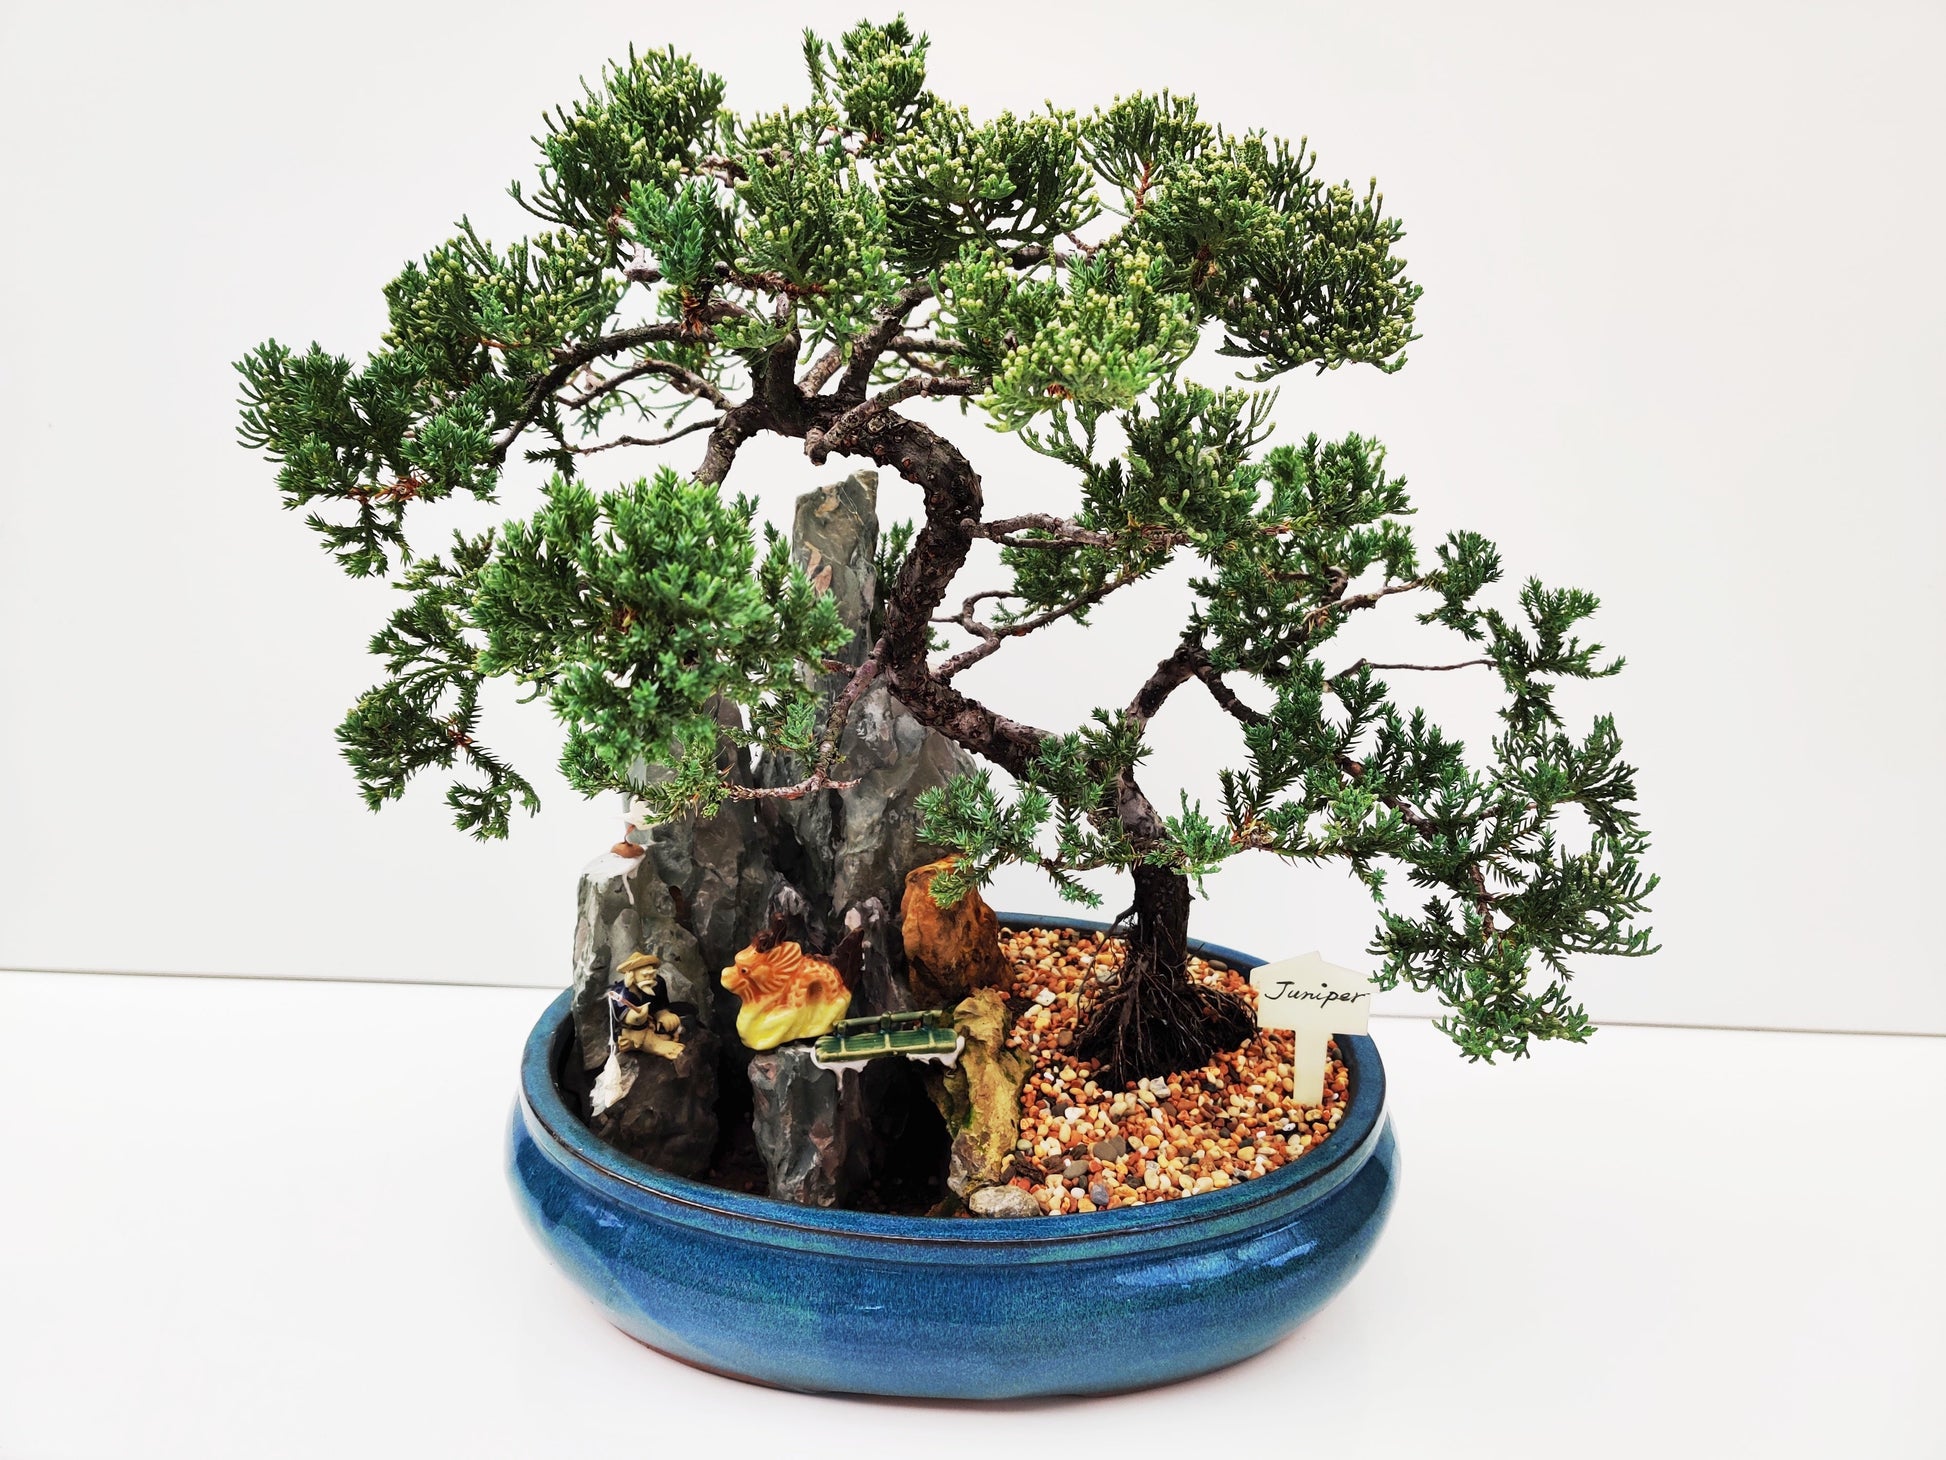 14" Juniper With Rock Feature Bonsai Tree Bonsai Gifts Nursery